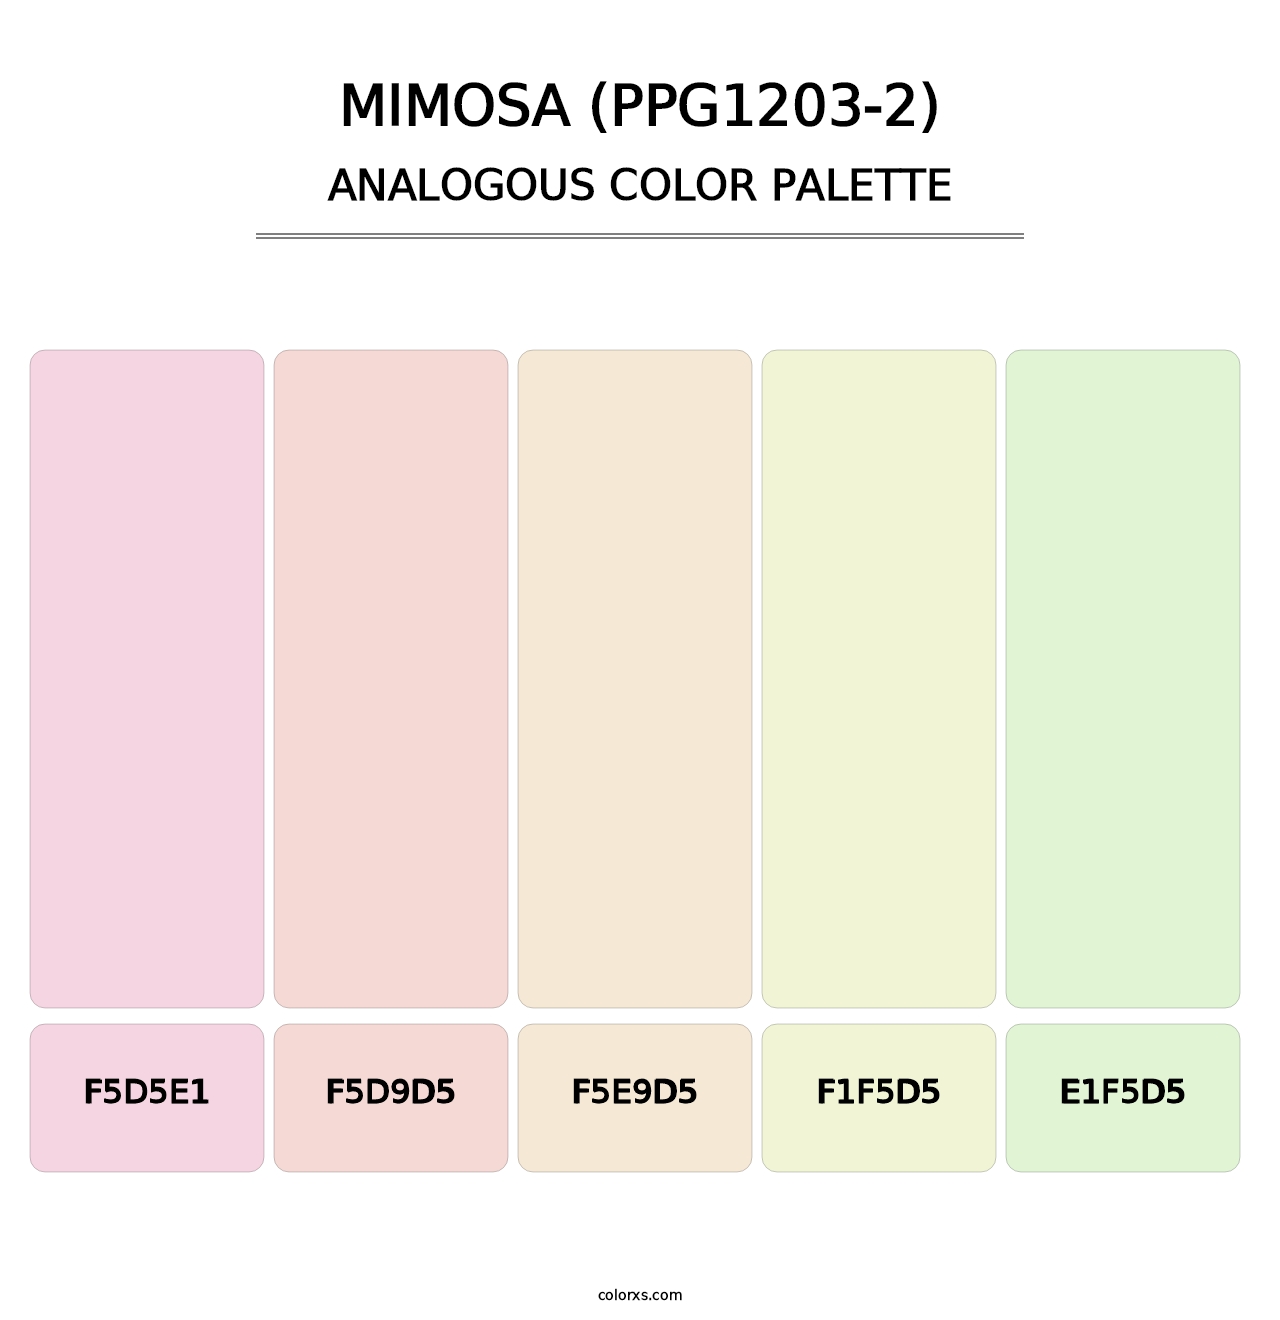 Mimosa (PPG1203-2) - Analogous Color Palette